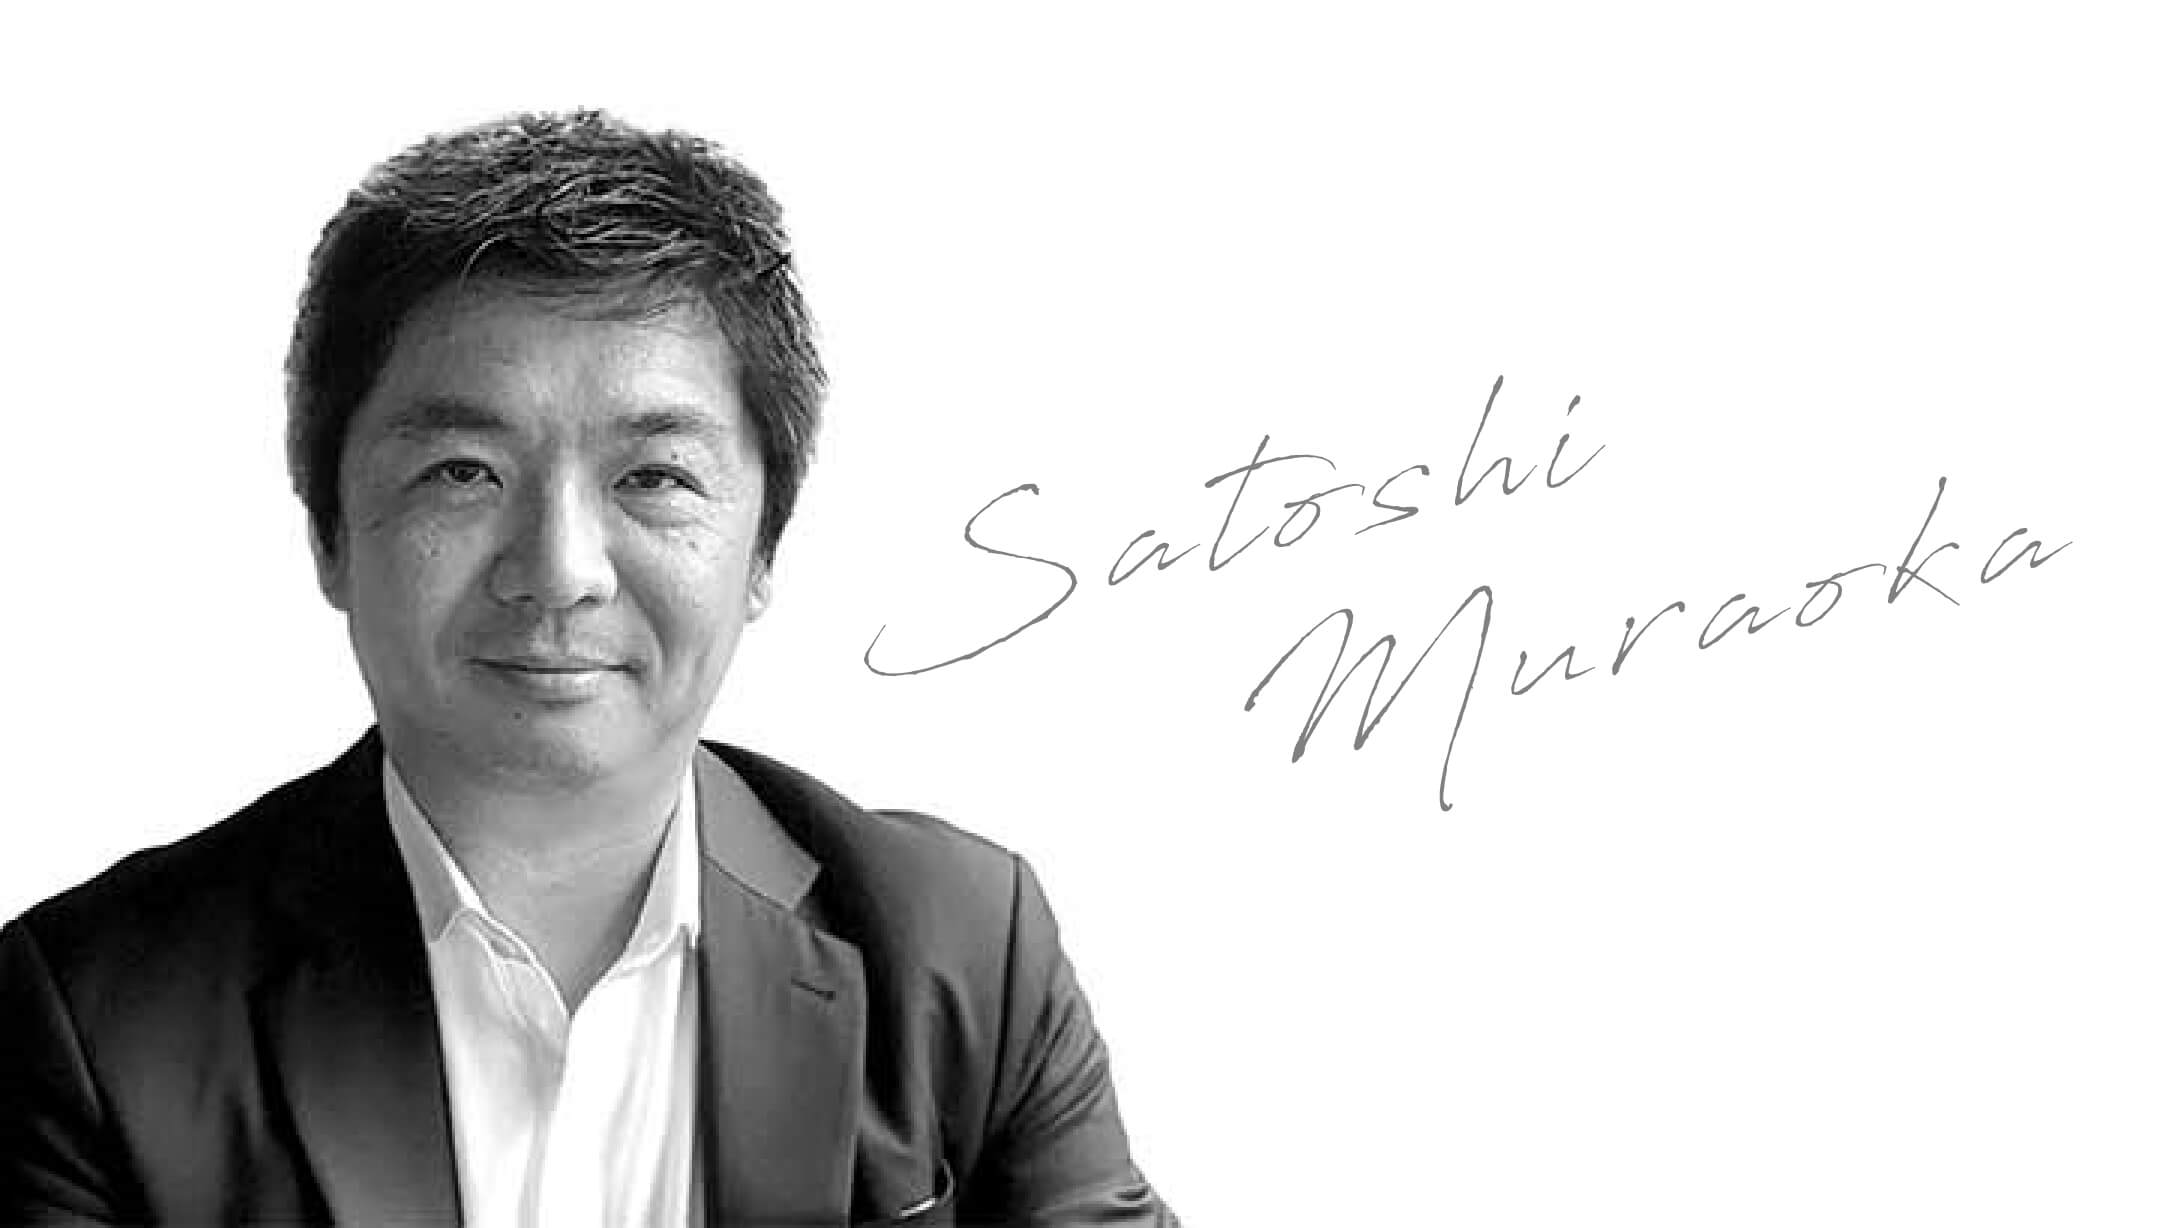 Satoshi Muraoka